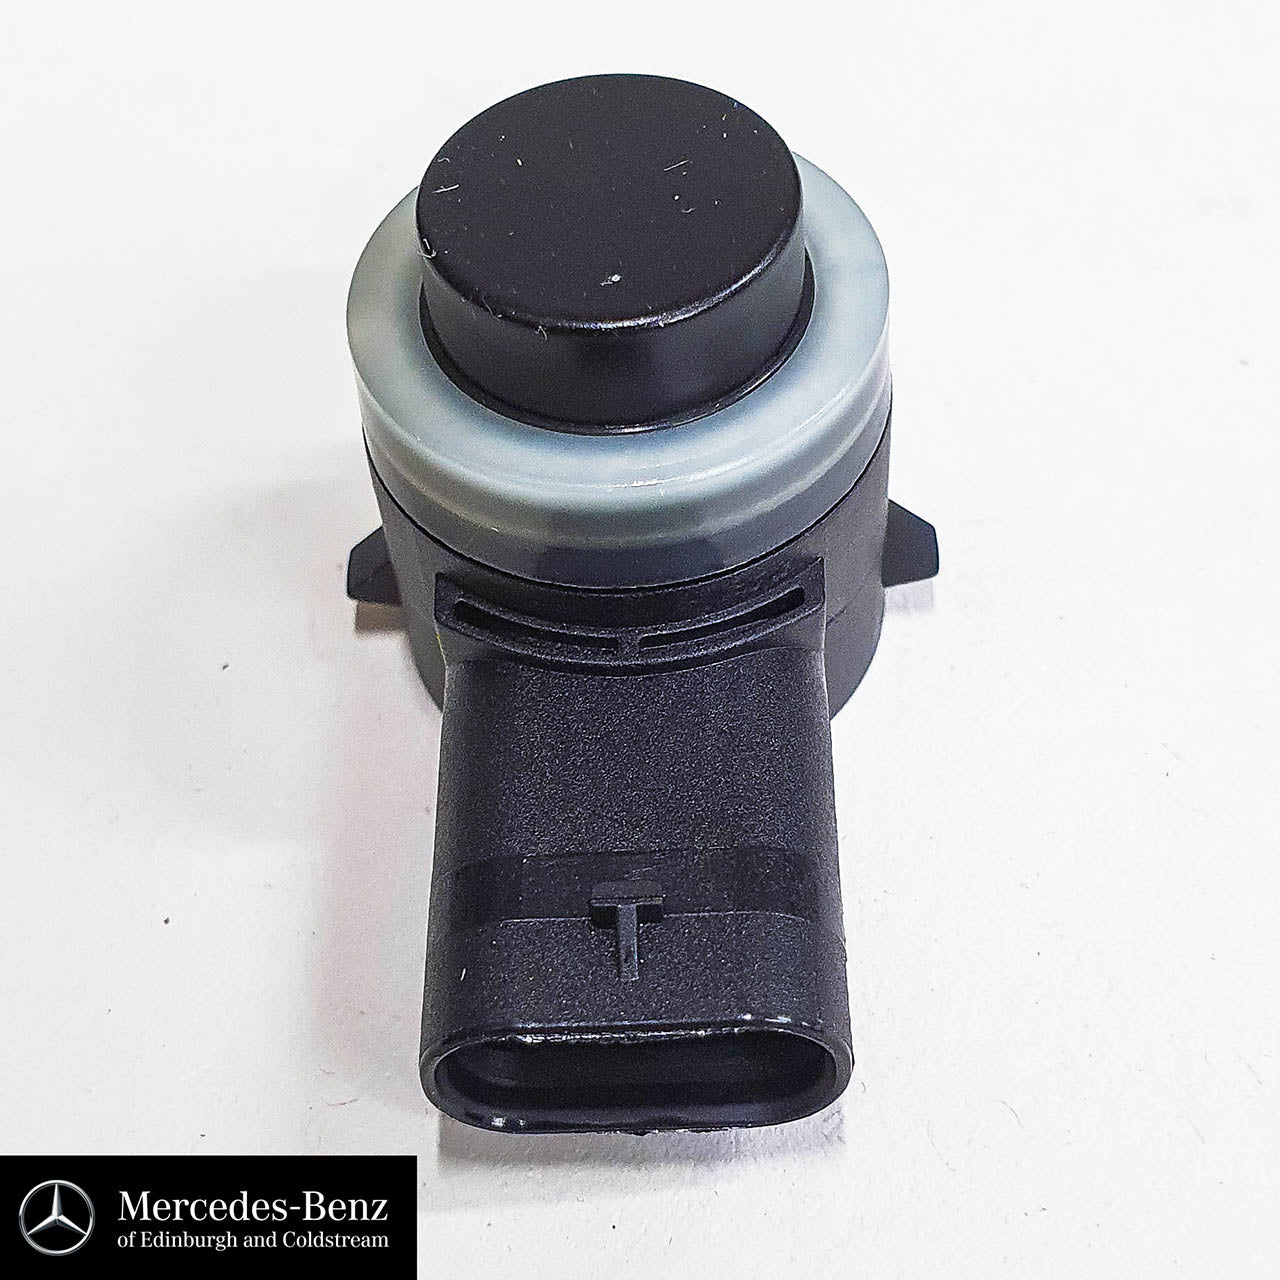 Genuine Mercedes-Benz distance sensor